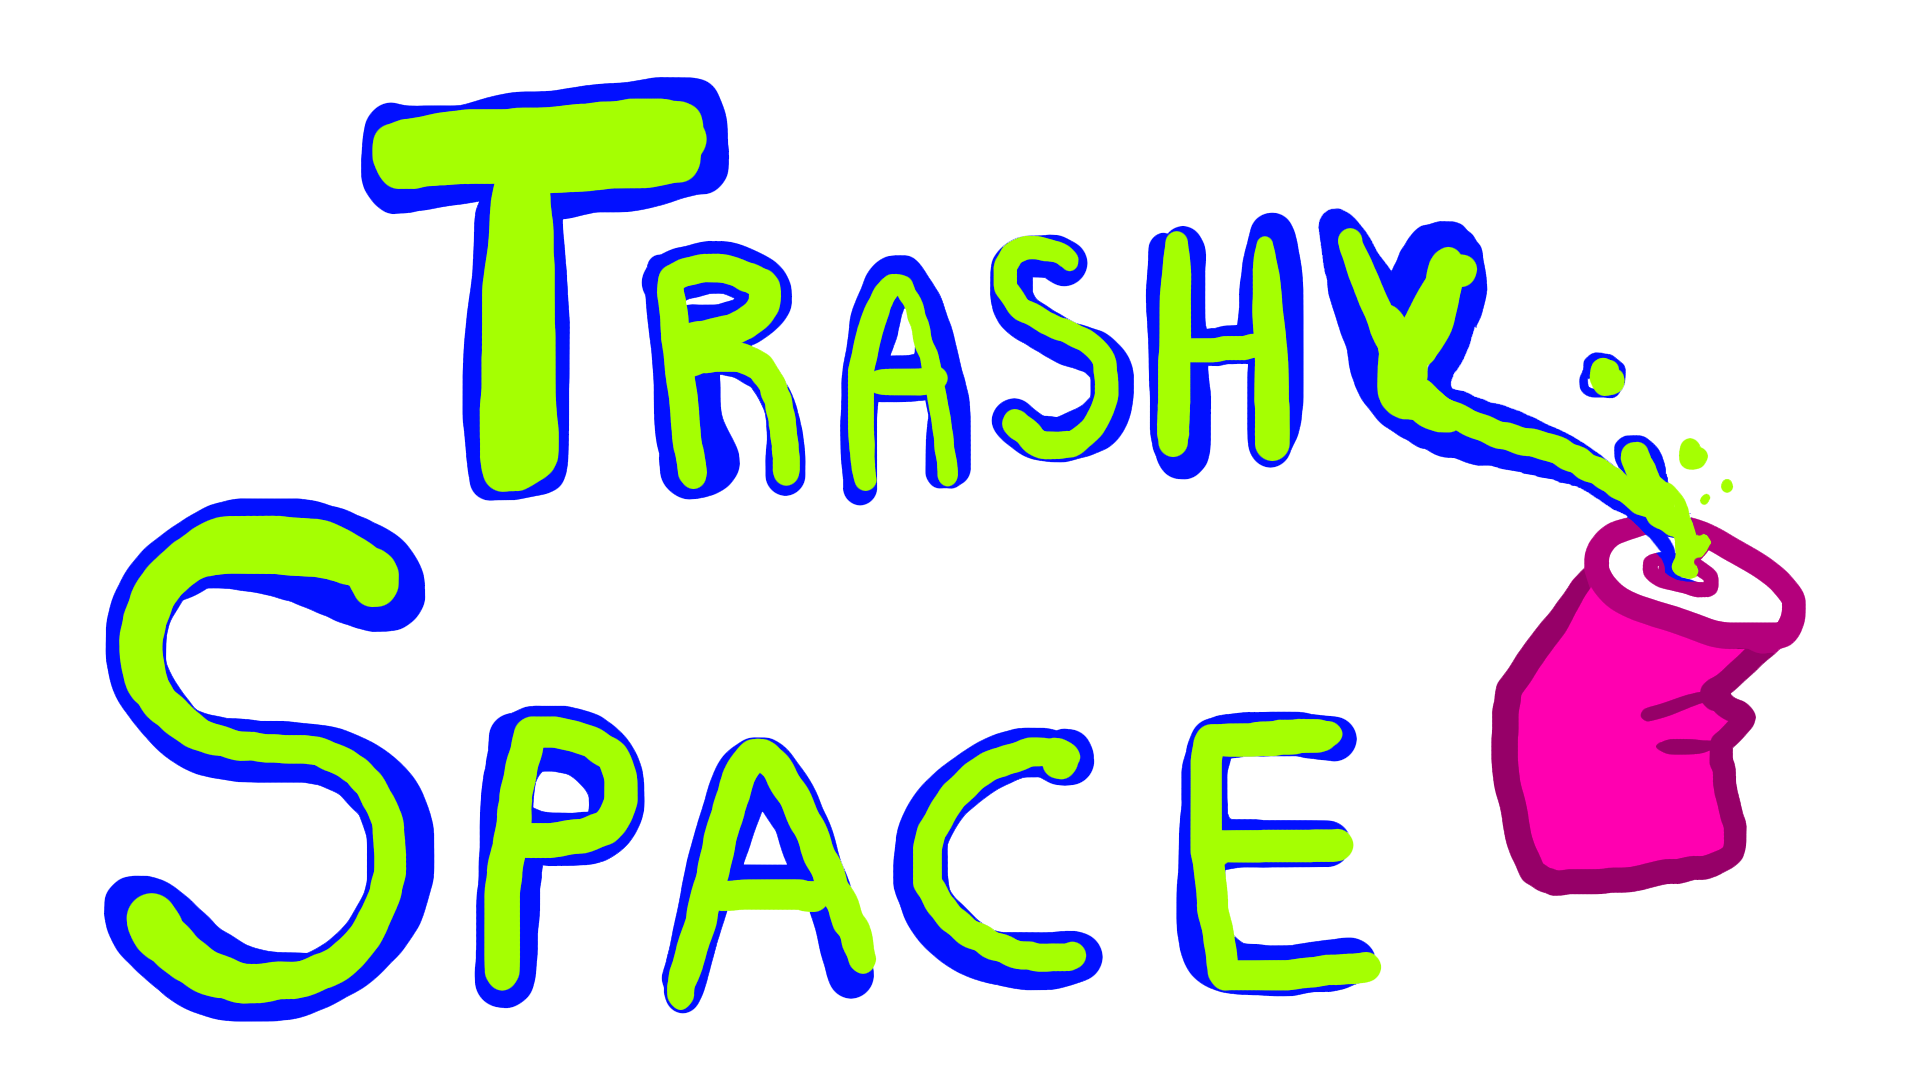 Trashy space